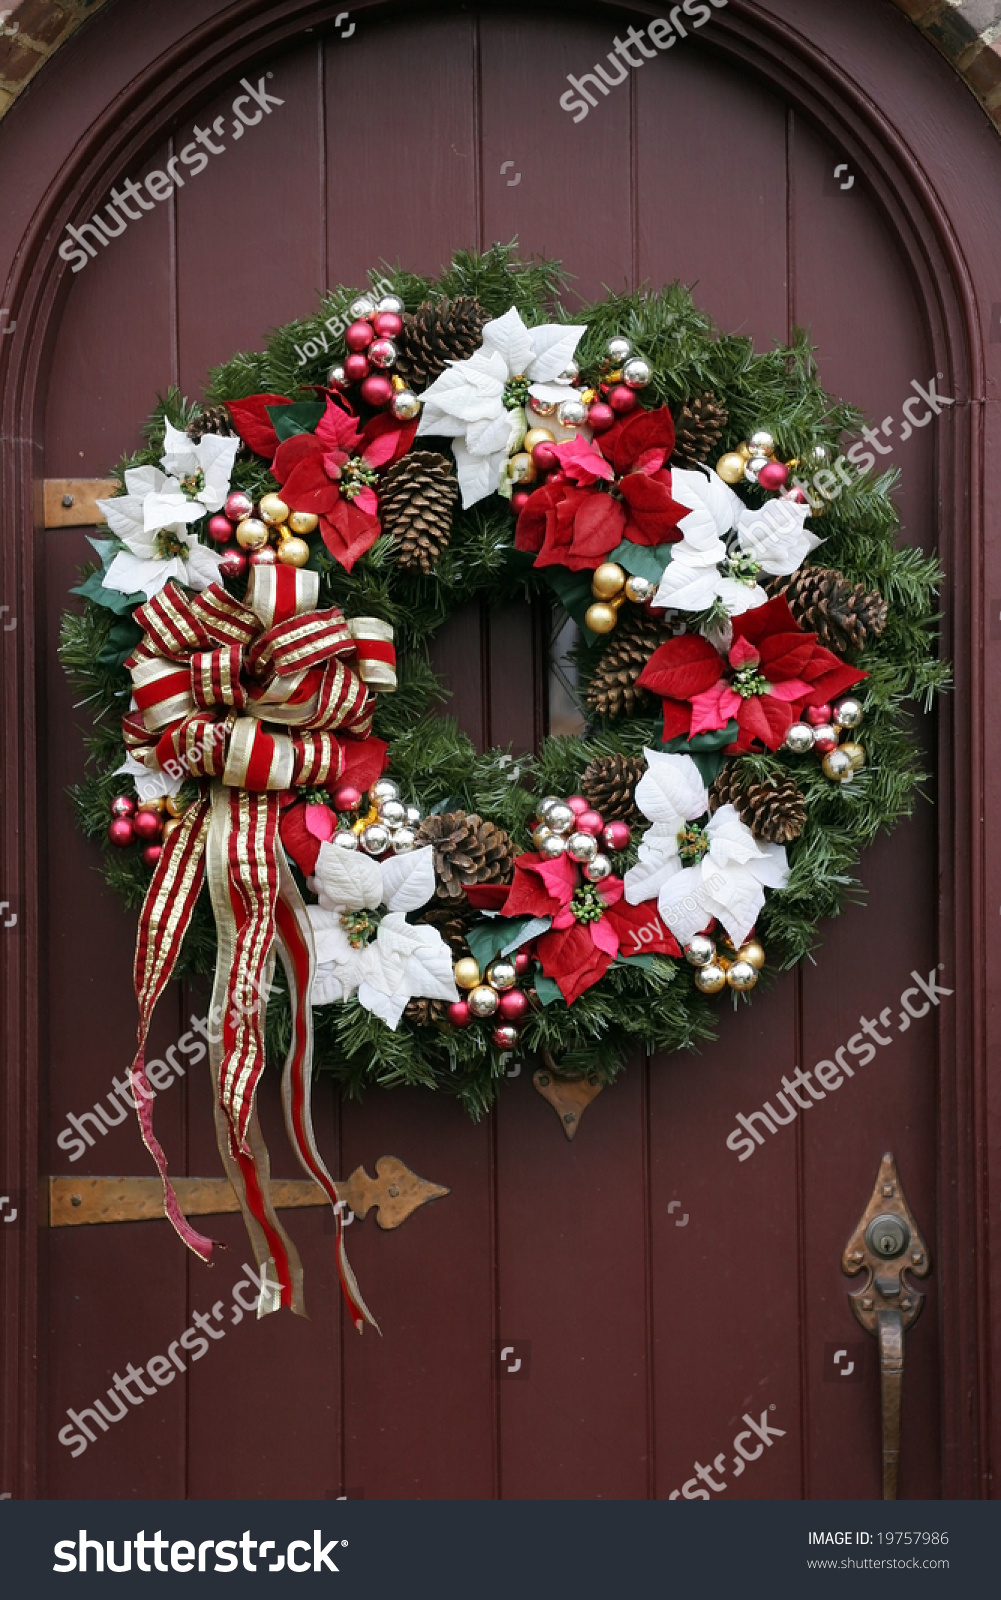 Beautiful Christmas Wreath On Brown Door Stock Photo 19757986 ...